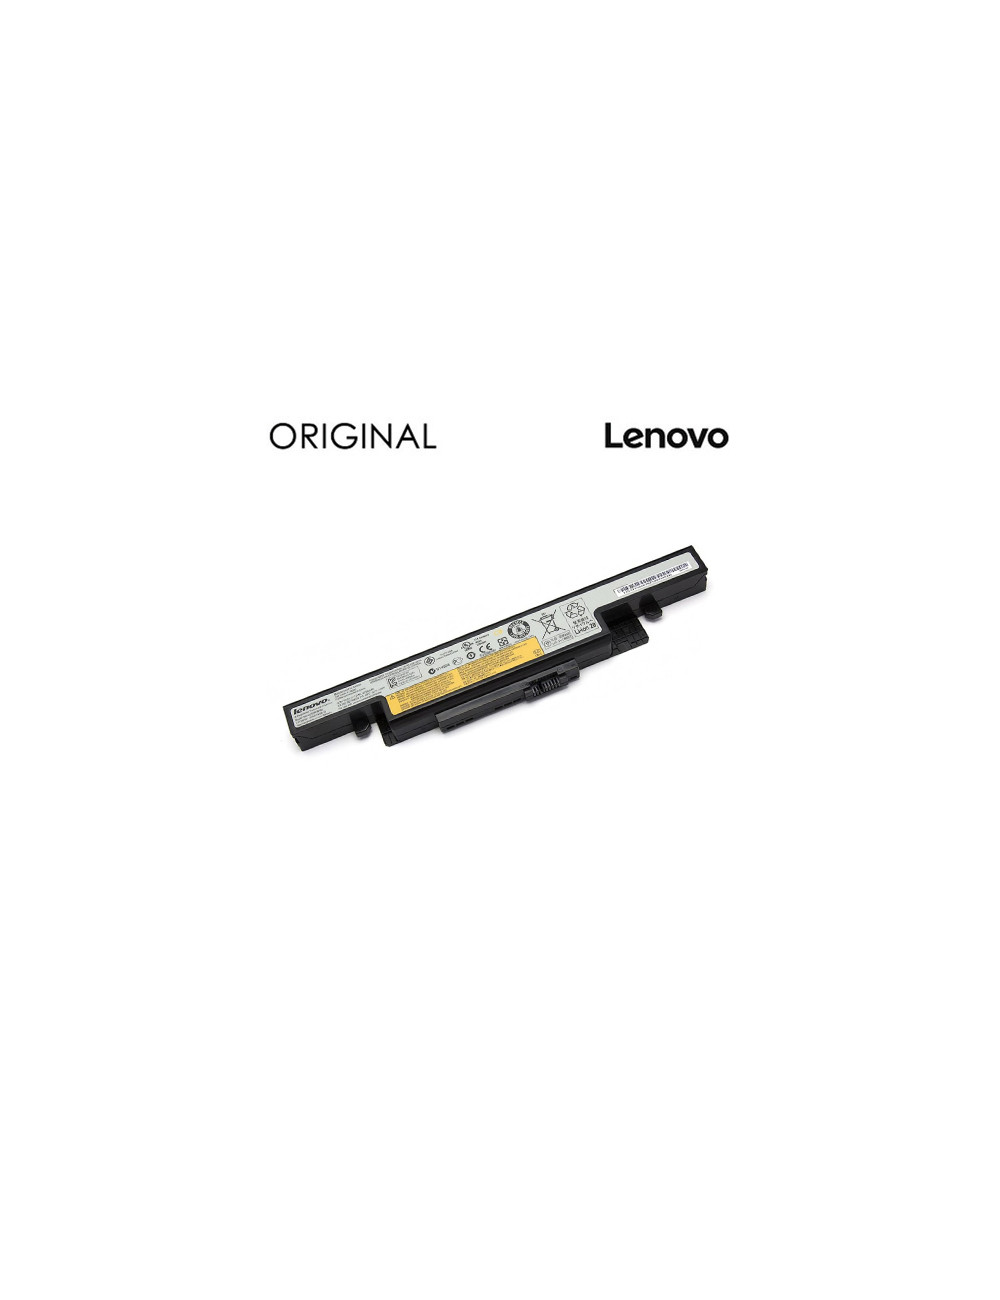 Nešiojamo kompiuterio baterija LENOVO L11S6R01, 6700mAh, Original